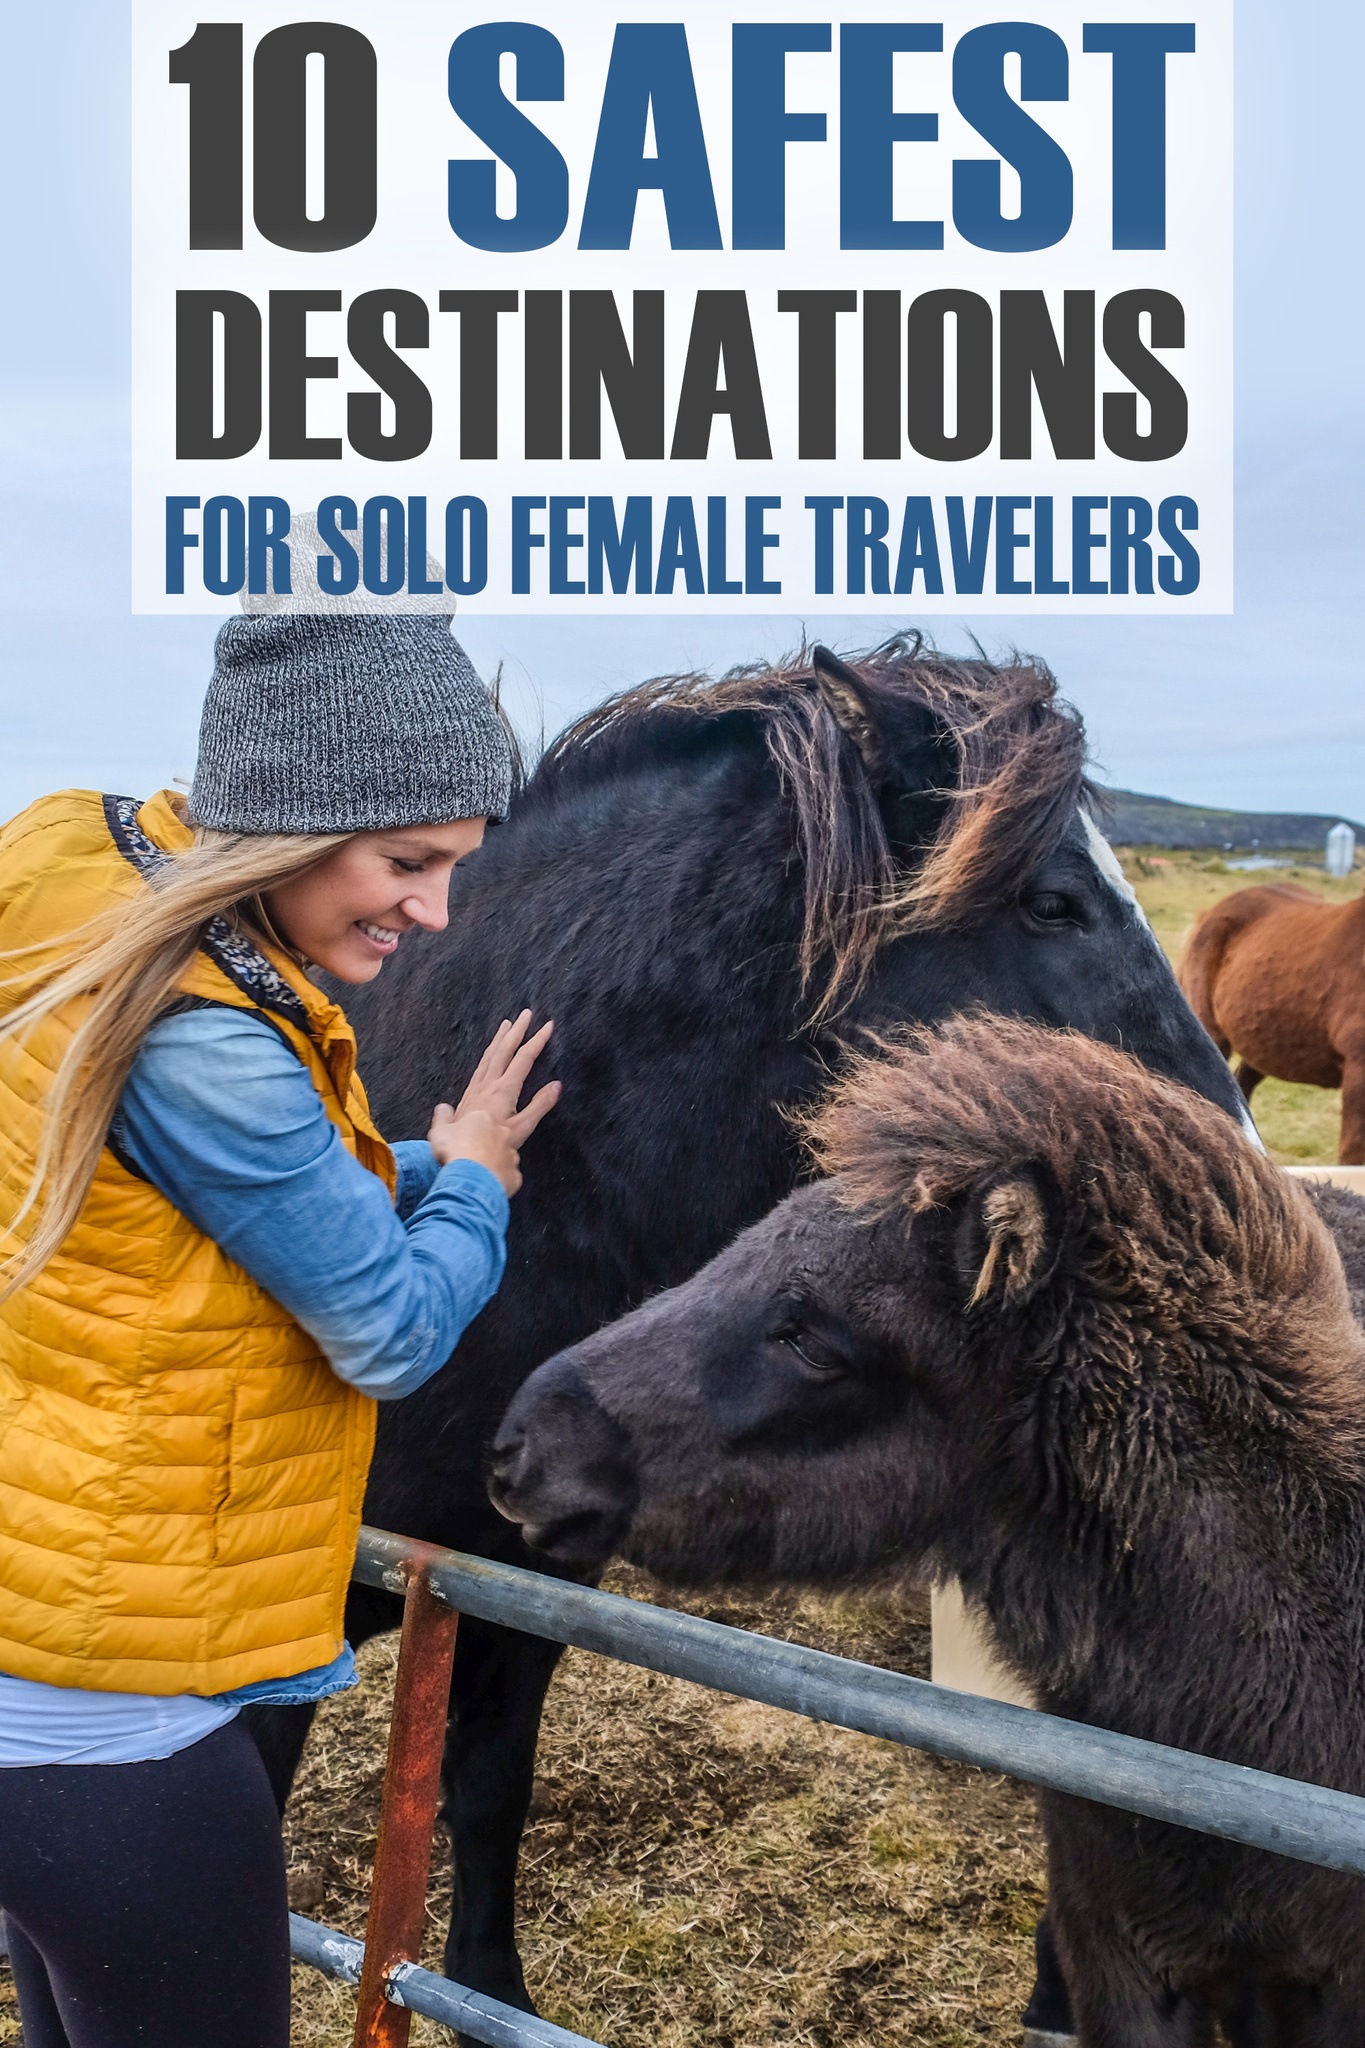 Safest Destinations for Solo Female Travelers